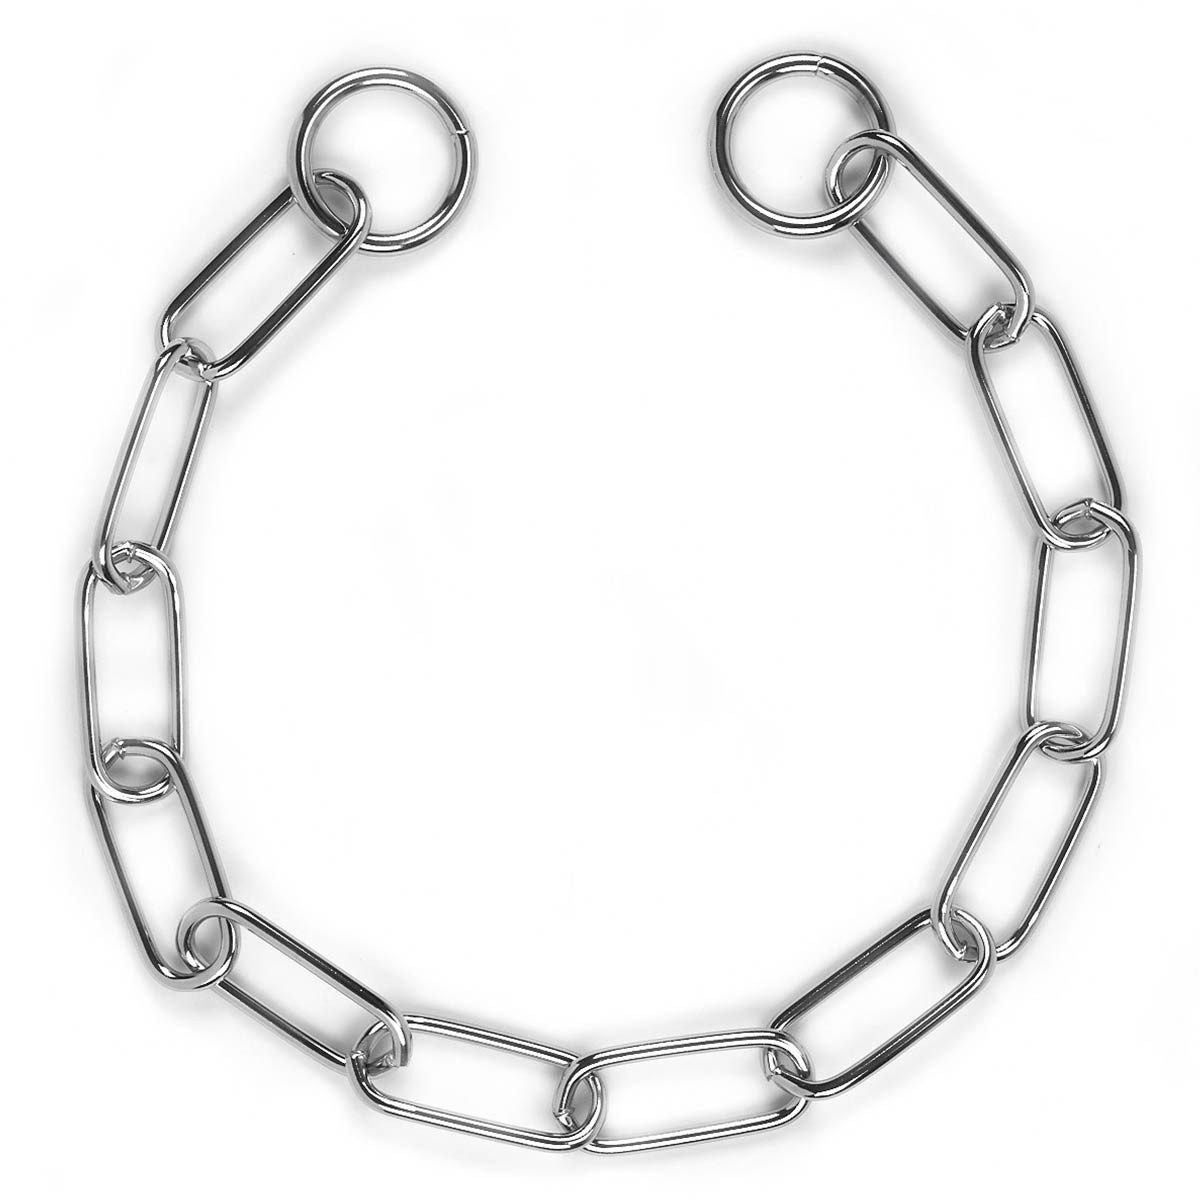 Long link chain 63 cm